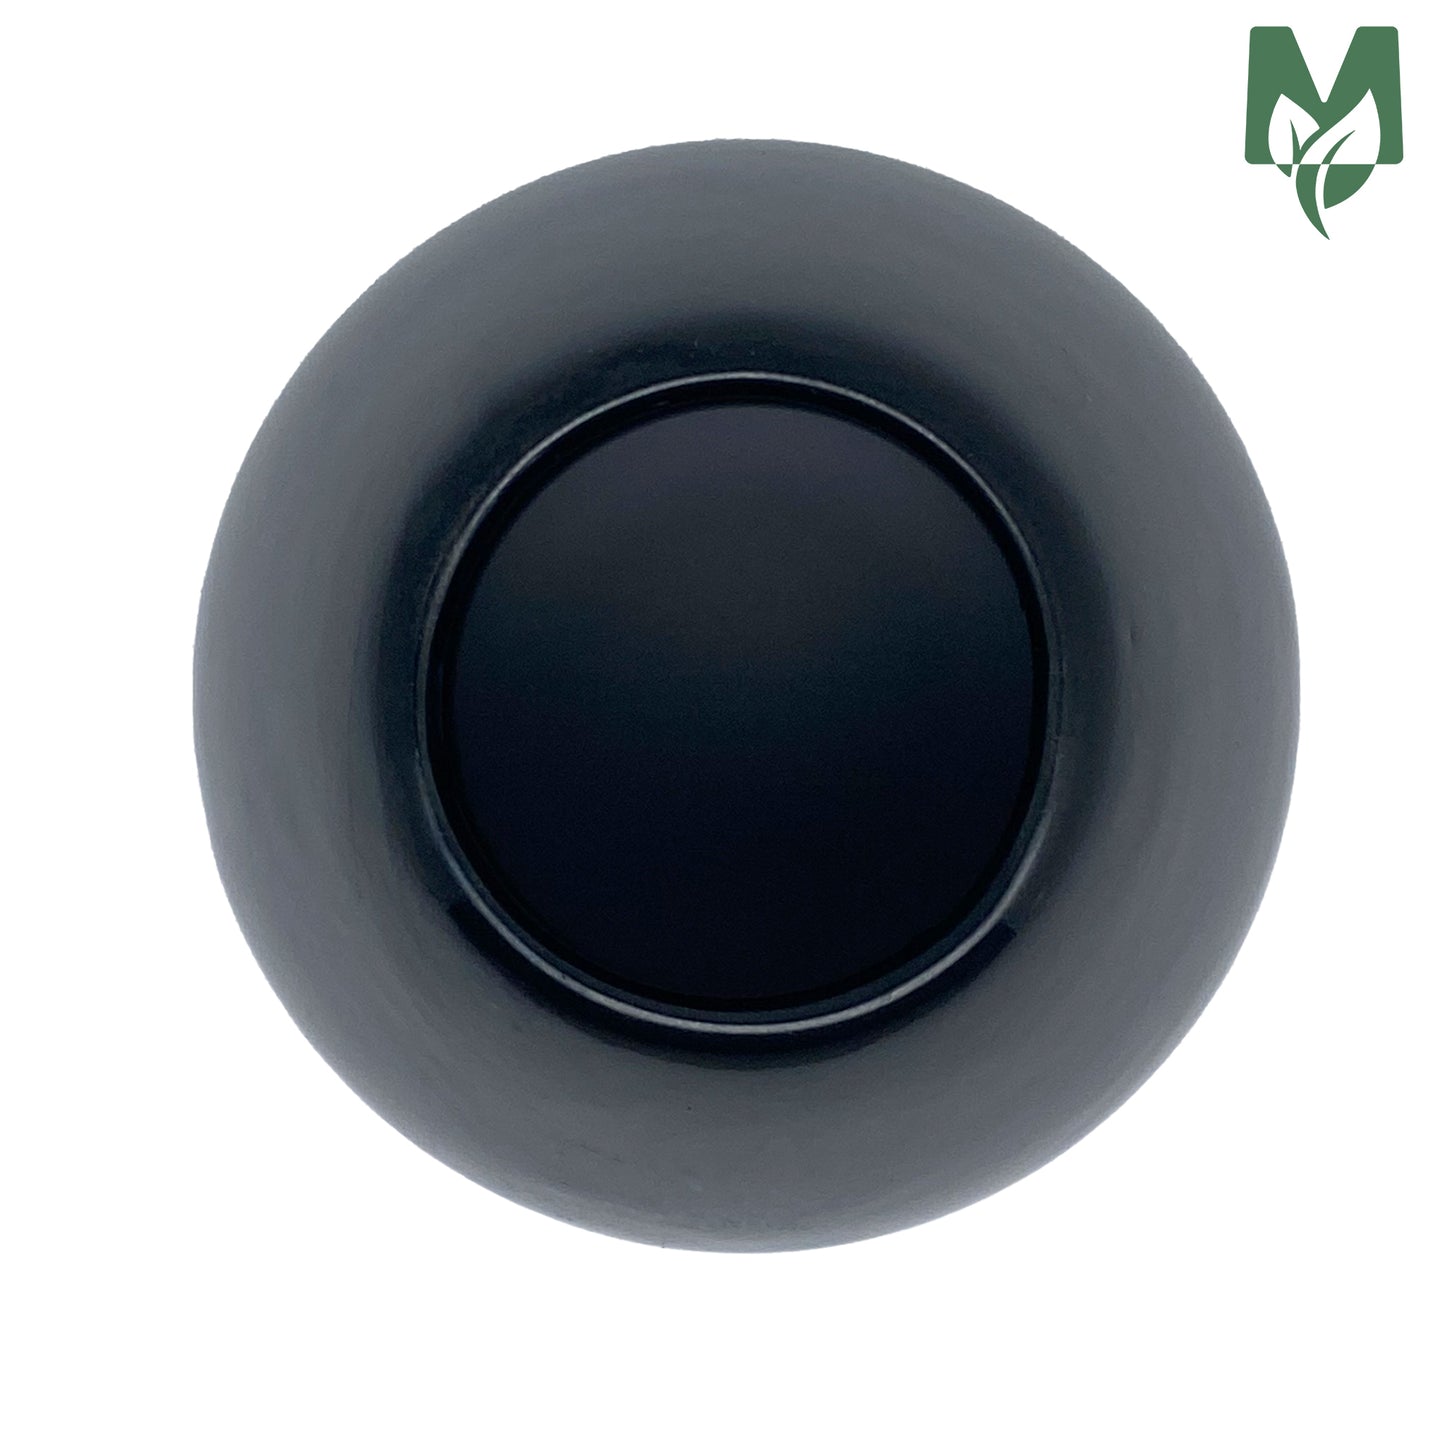 Matchaeco Matcha whisk stand, black ceramic